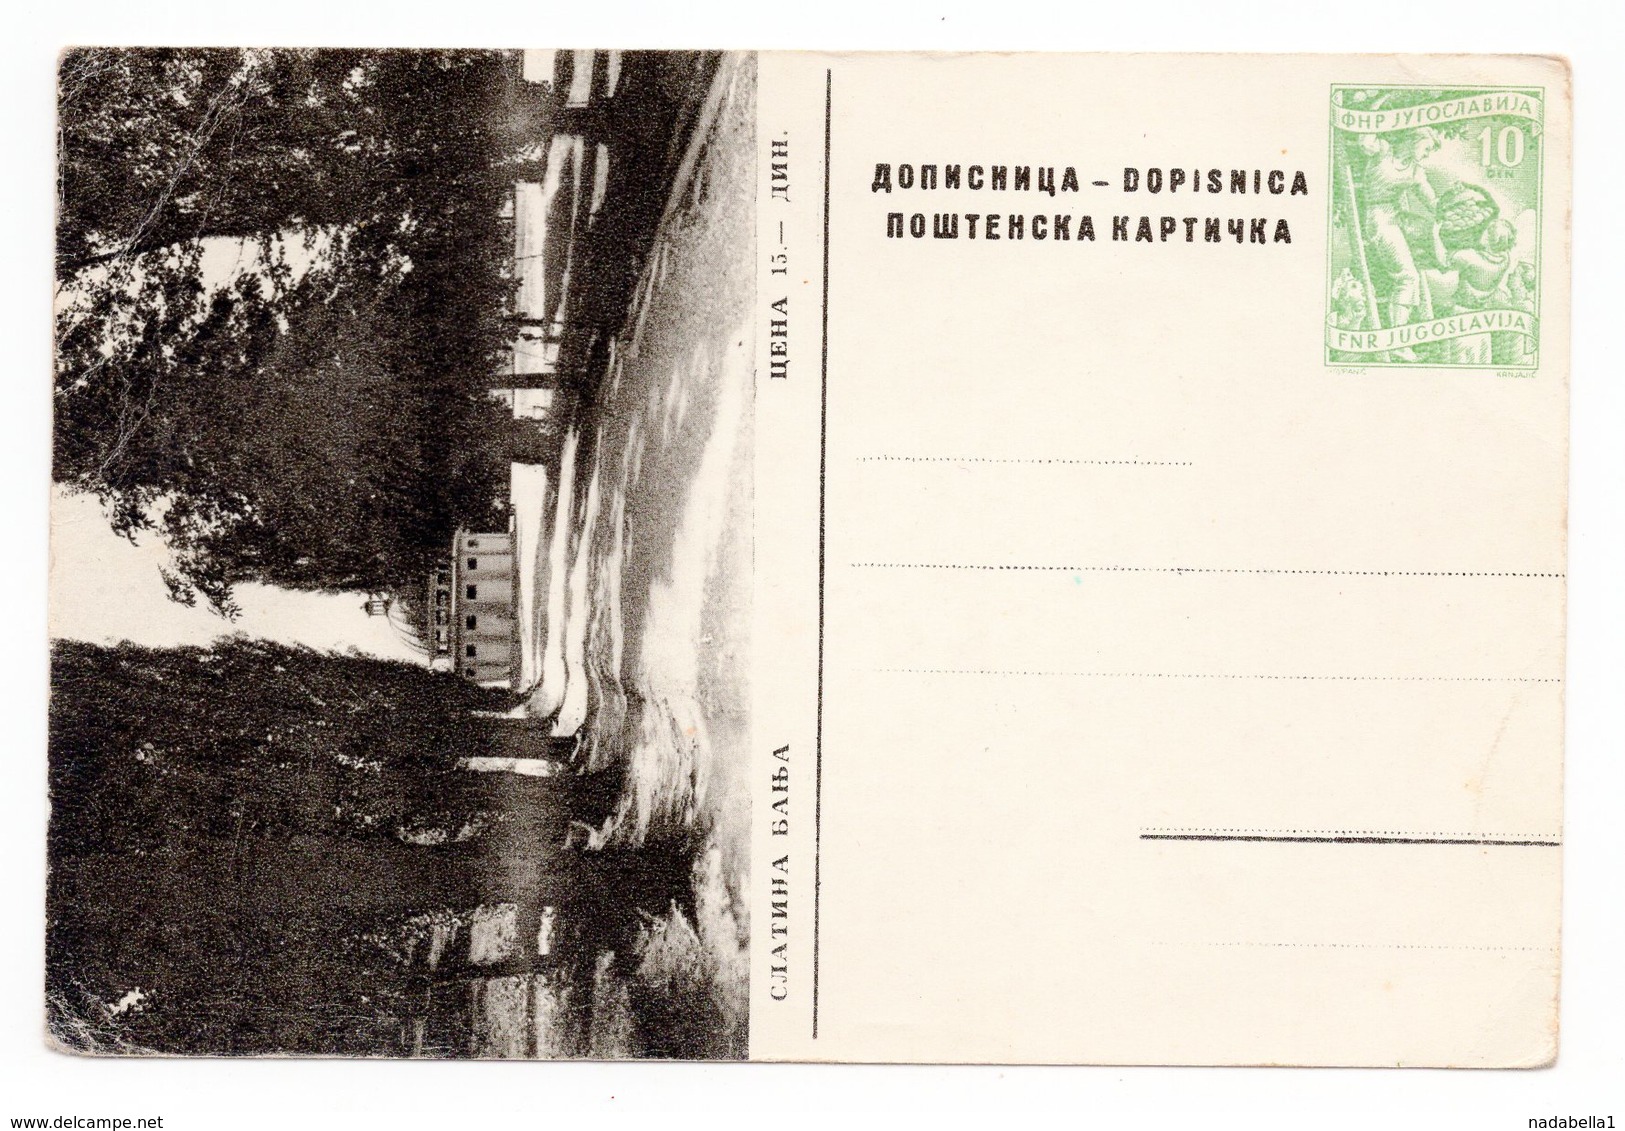 1956 YUGOSLAVIA, CROATIA, SLATINA BANJA, 10 DINARA GREEN, ILLUSTRATED STATIONERY CARD, MINT - Postal Stationery